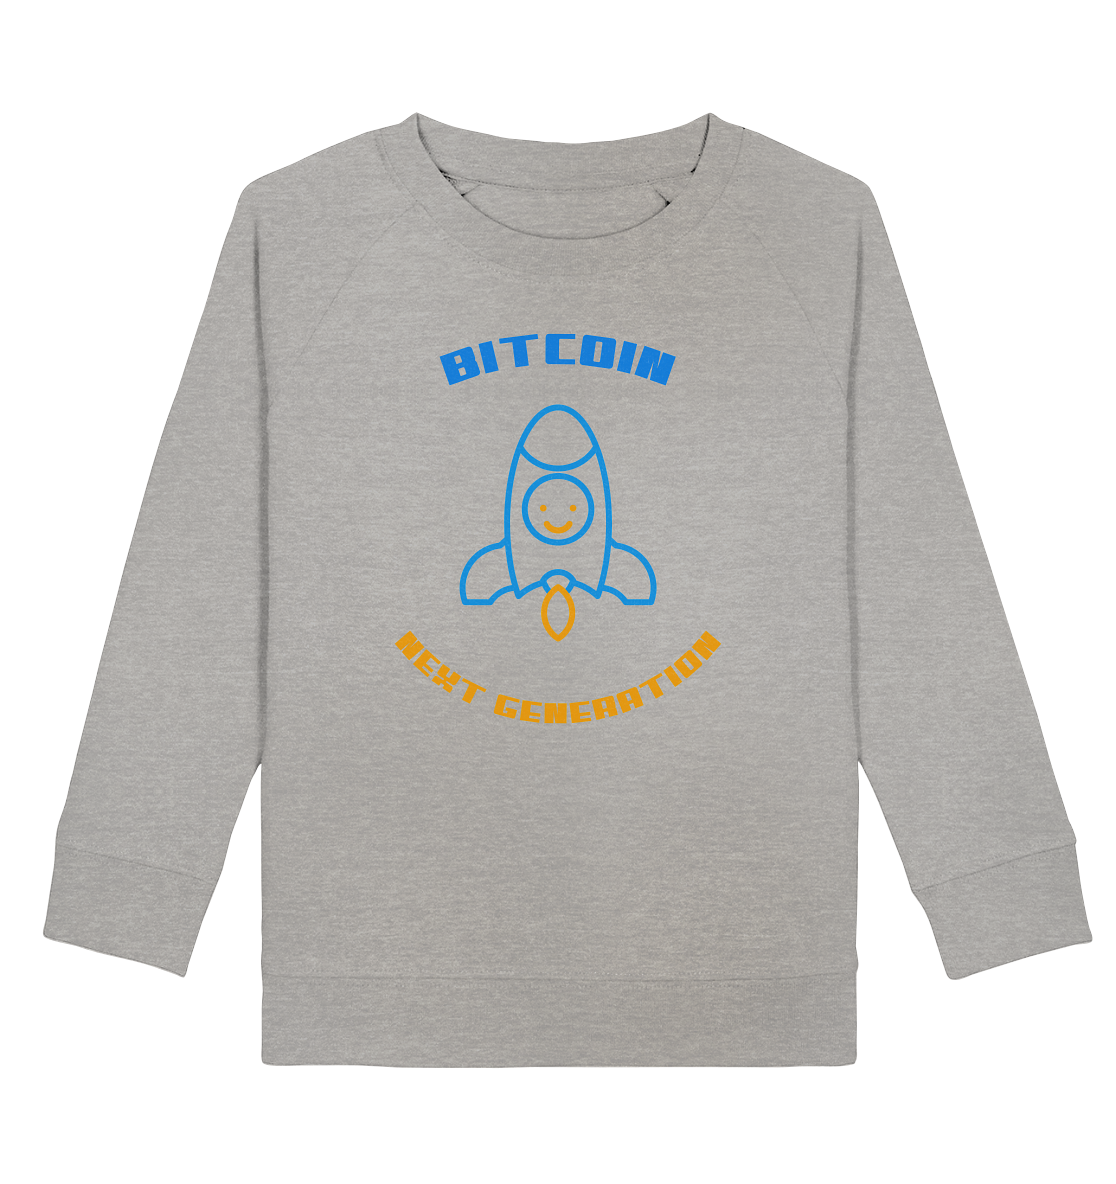 Bitcoin - Next Generation - Kids Organic Sweatshirt